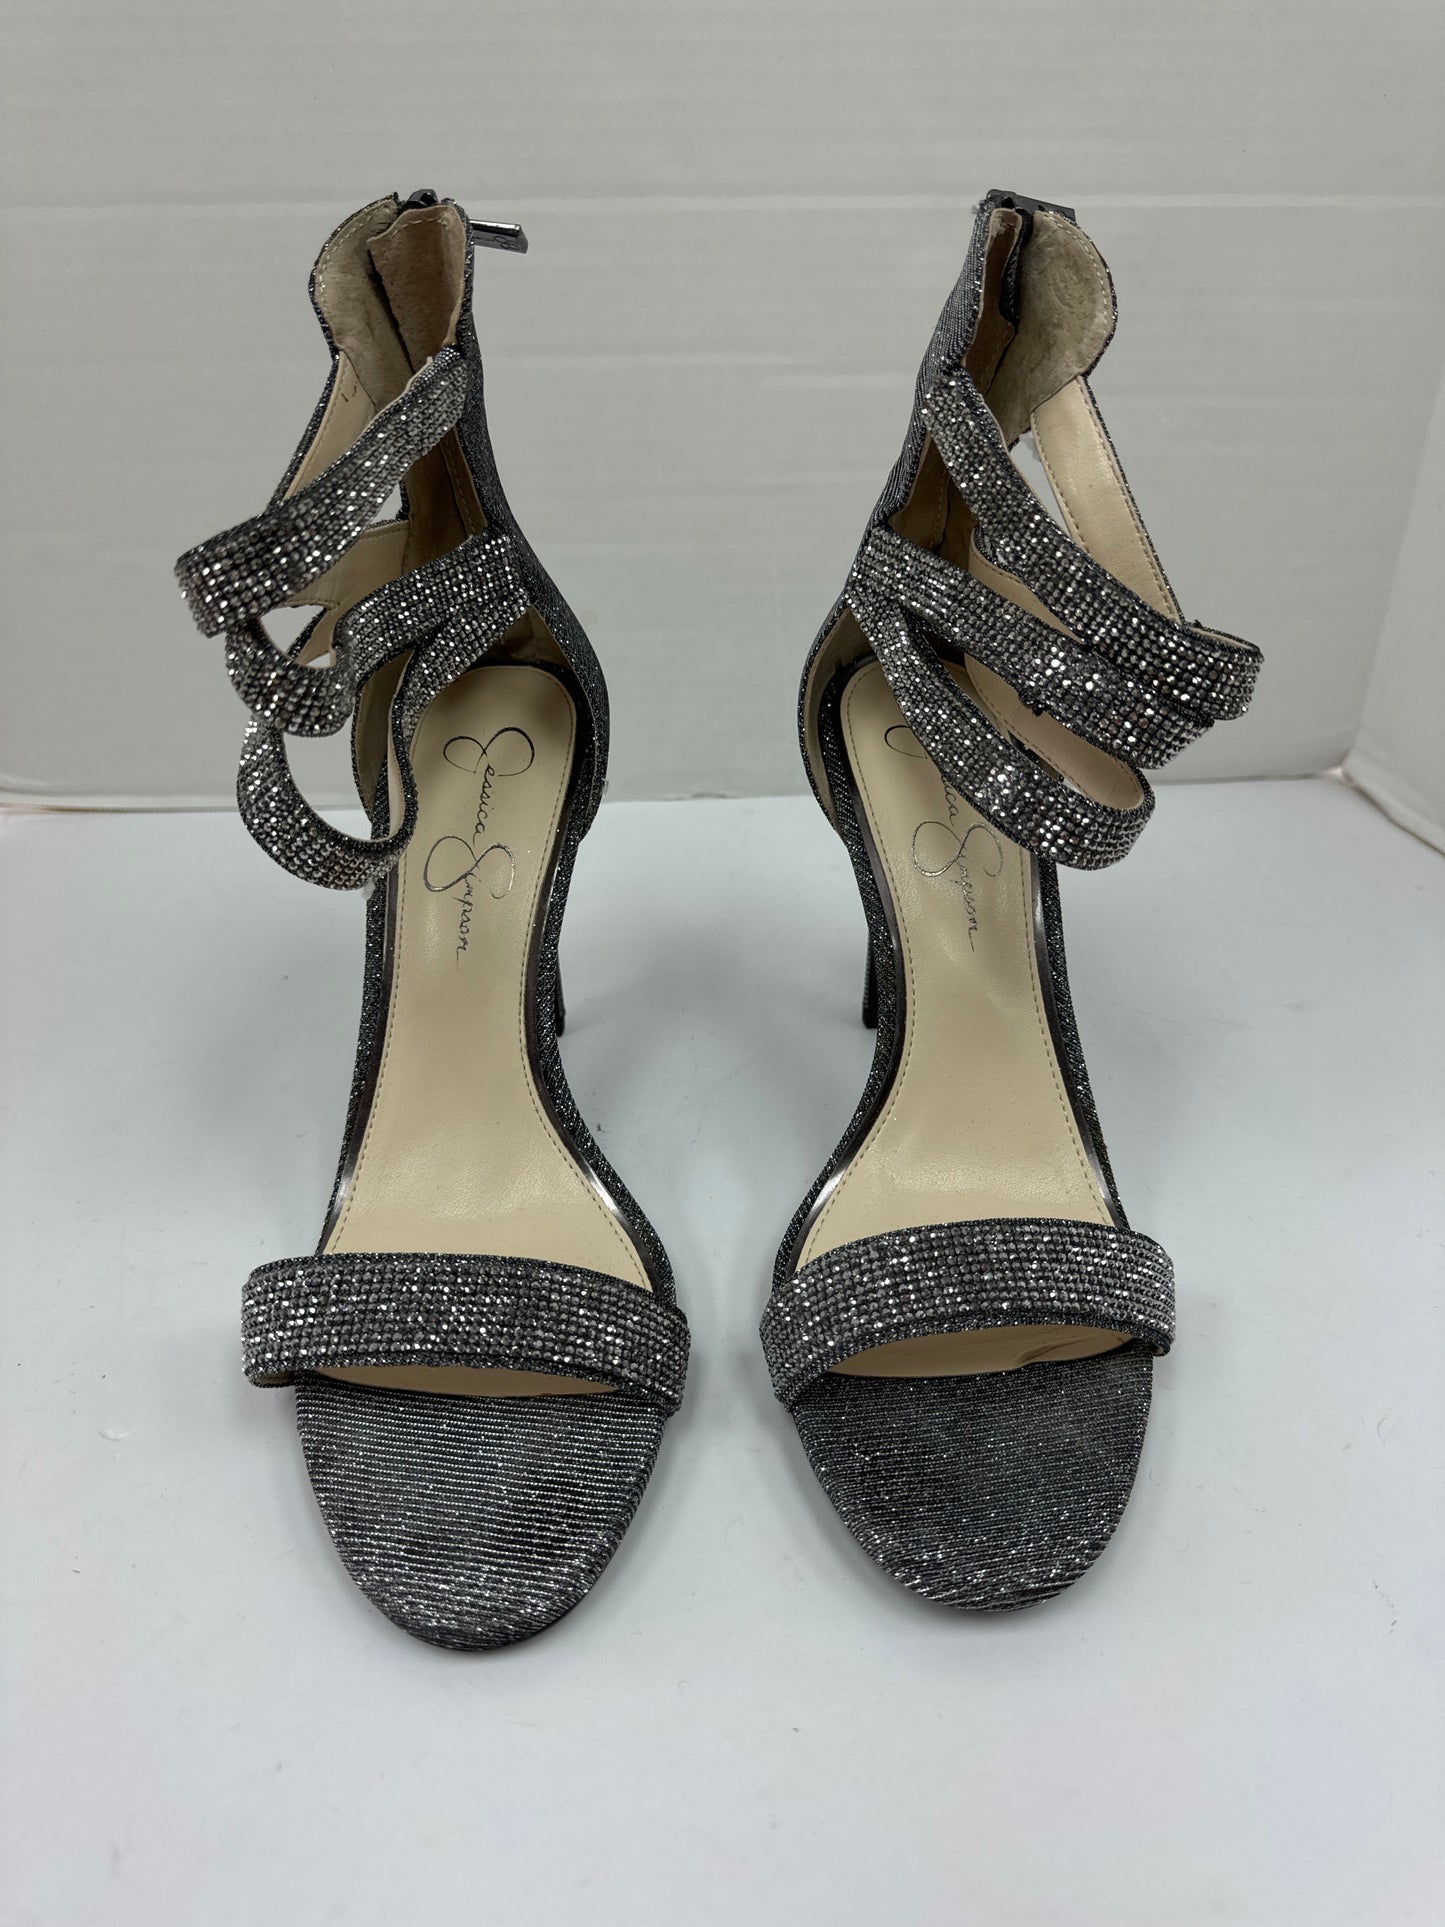 Silver Sandals Heels Stiletto Jessica Simpson, Size 10